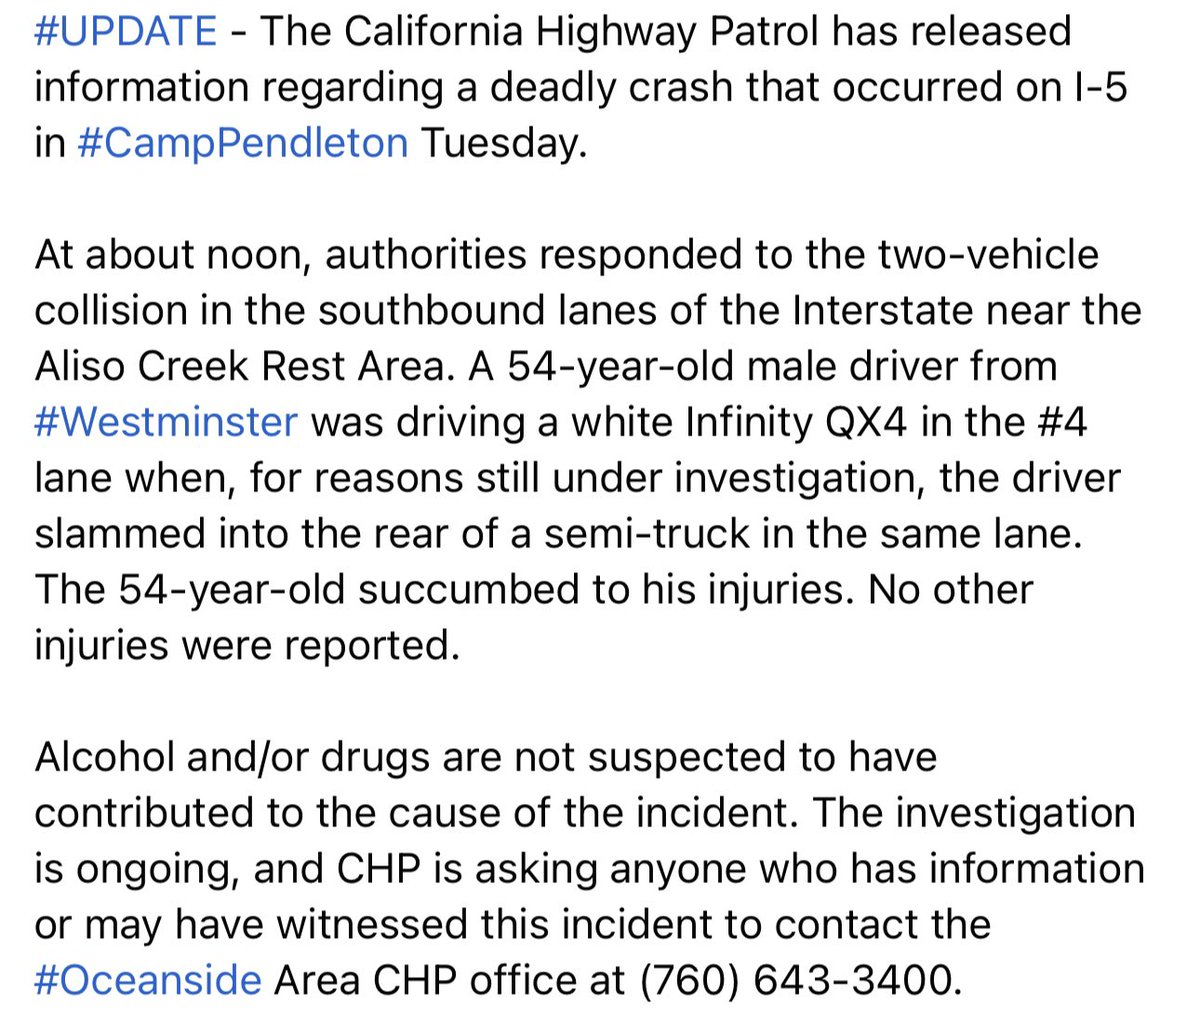 California Highway Patrol releases information regarding deadly crash on I-5 in CampPendleton: